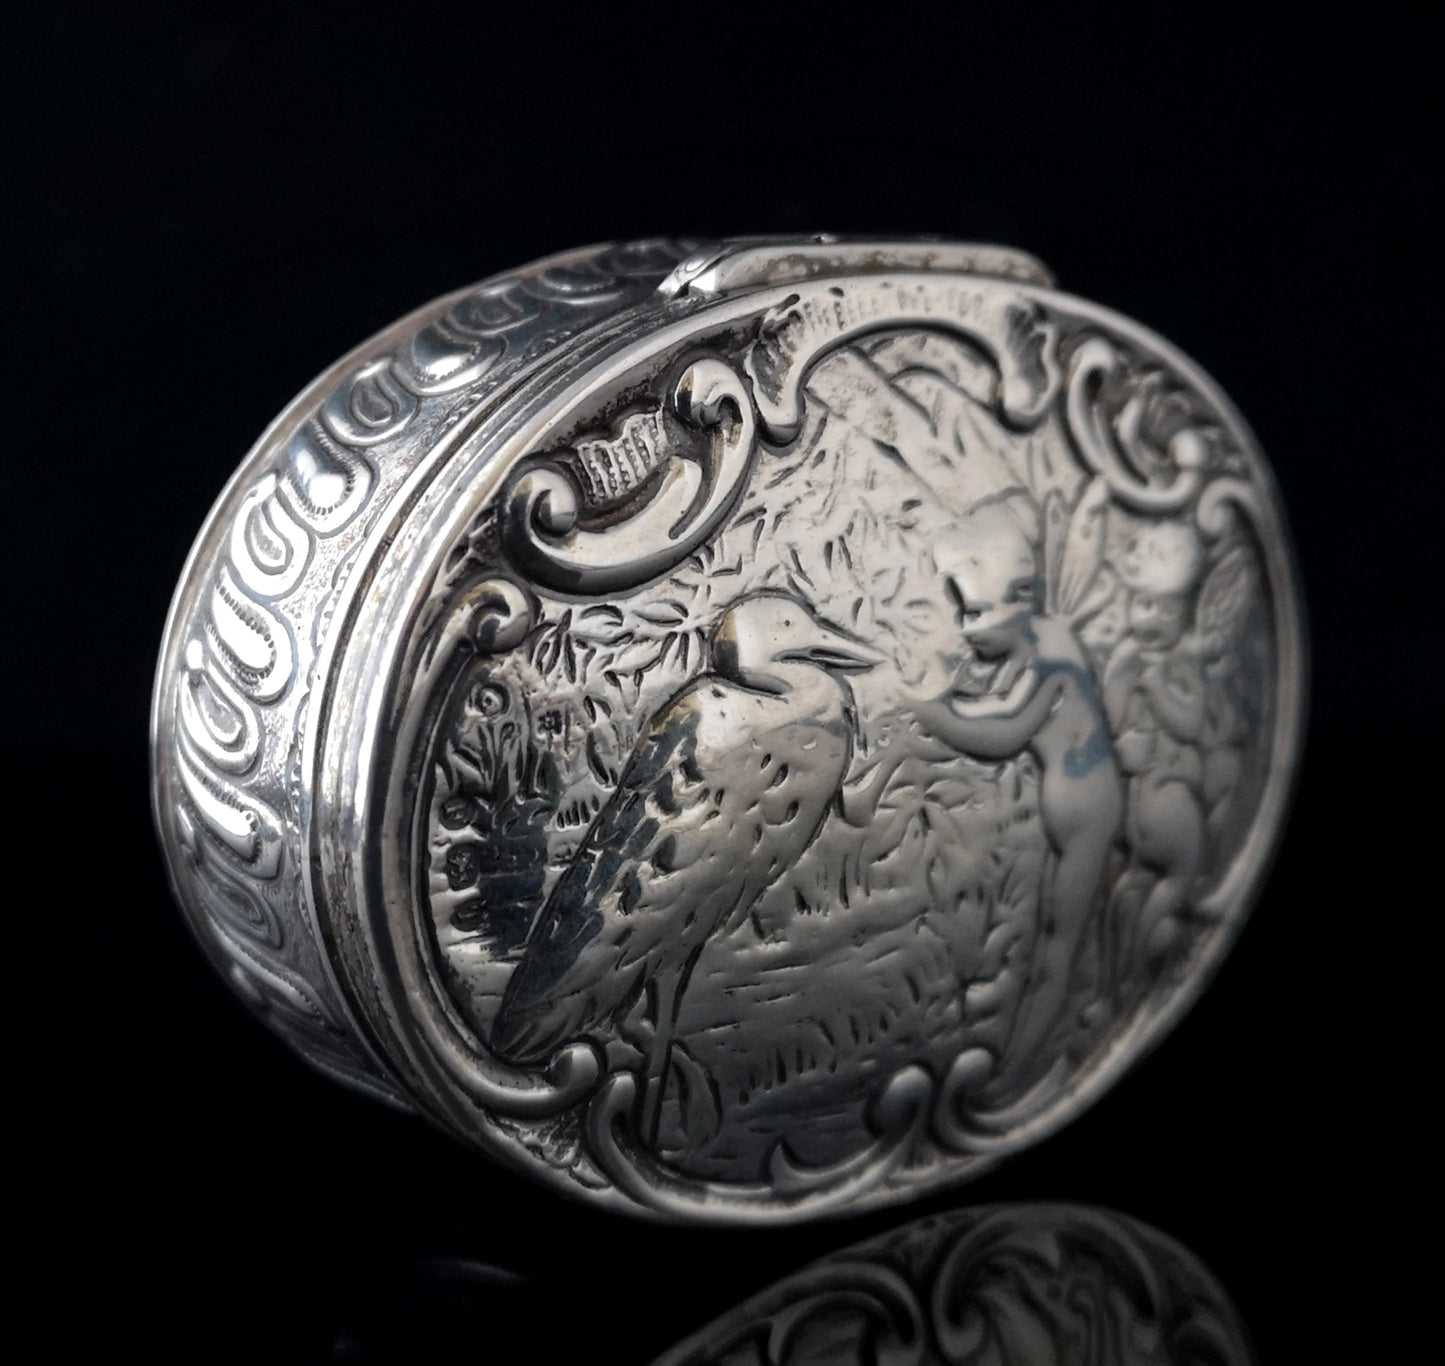 Antique Victorian silver snuff box, Stork and Fairies